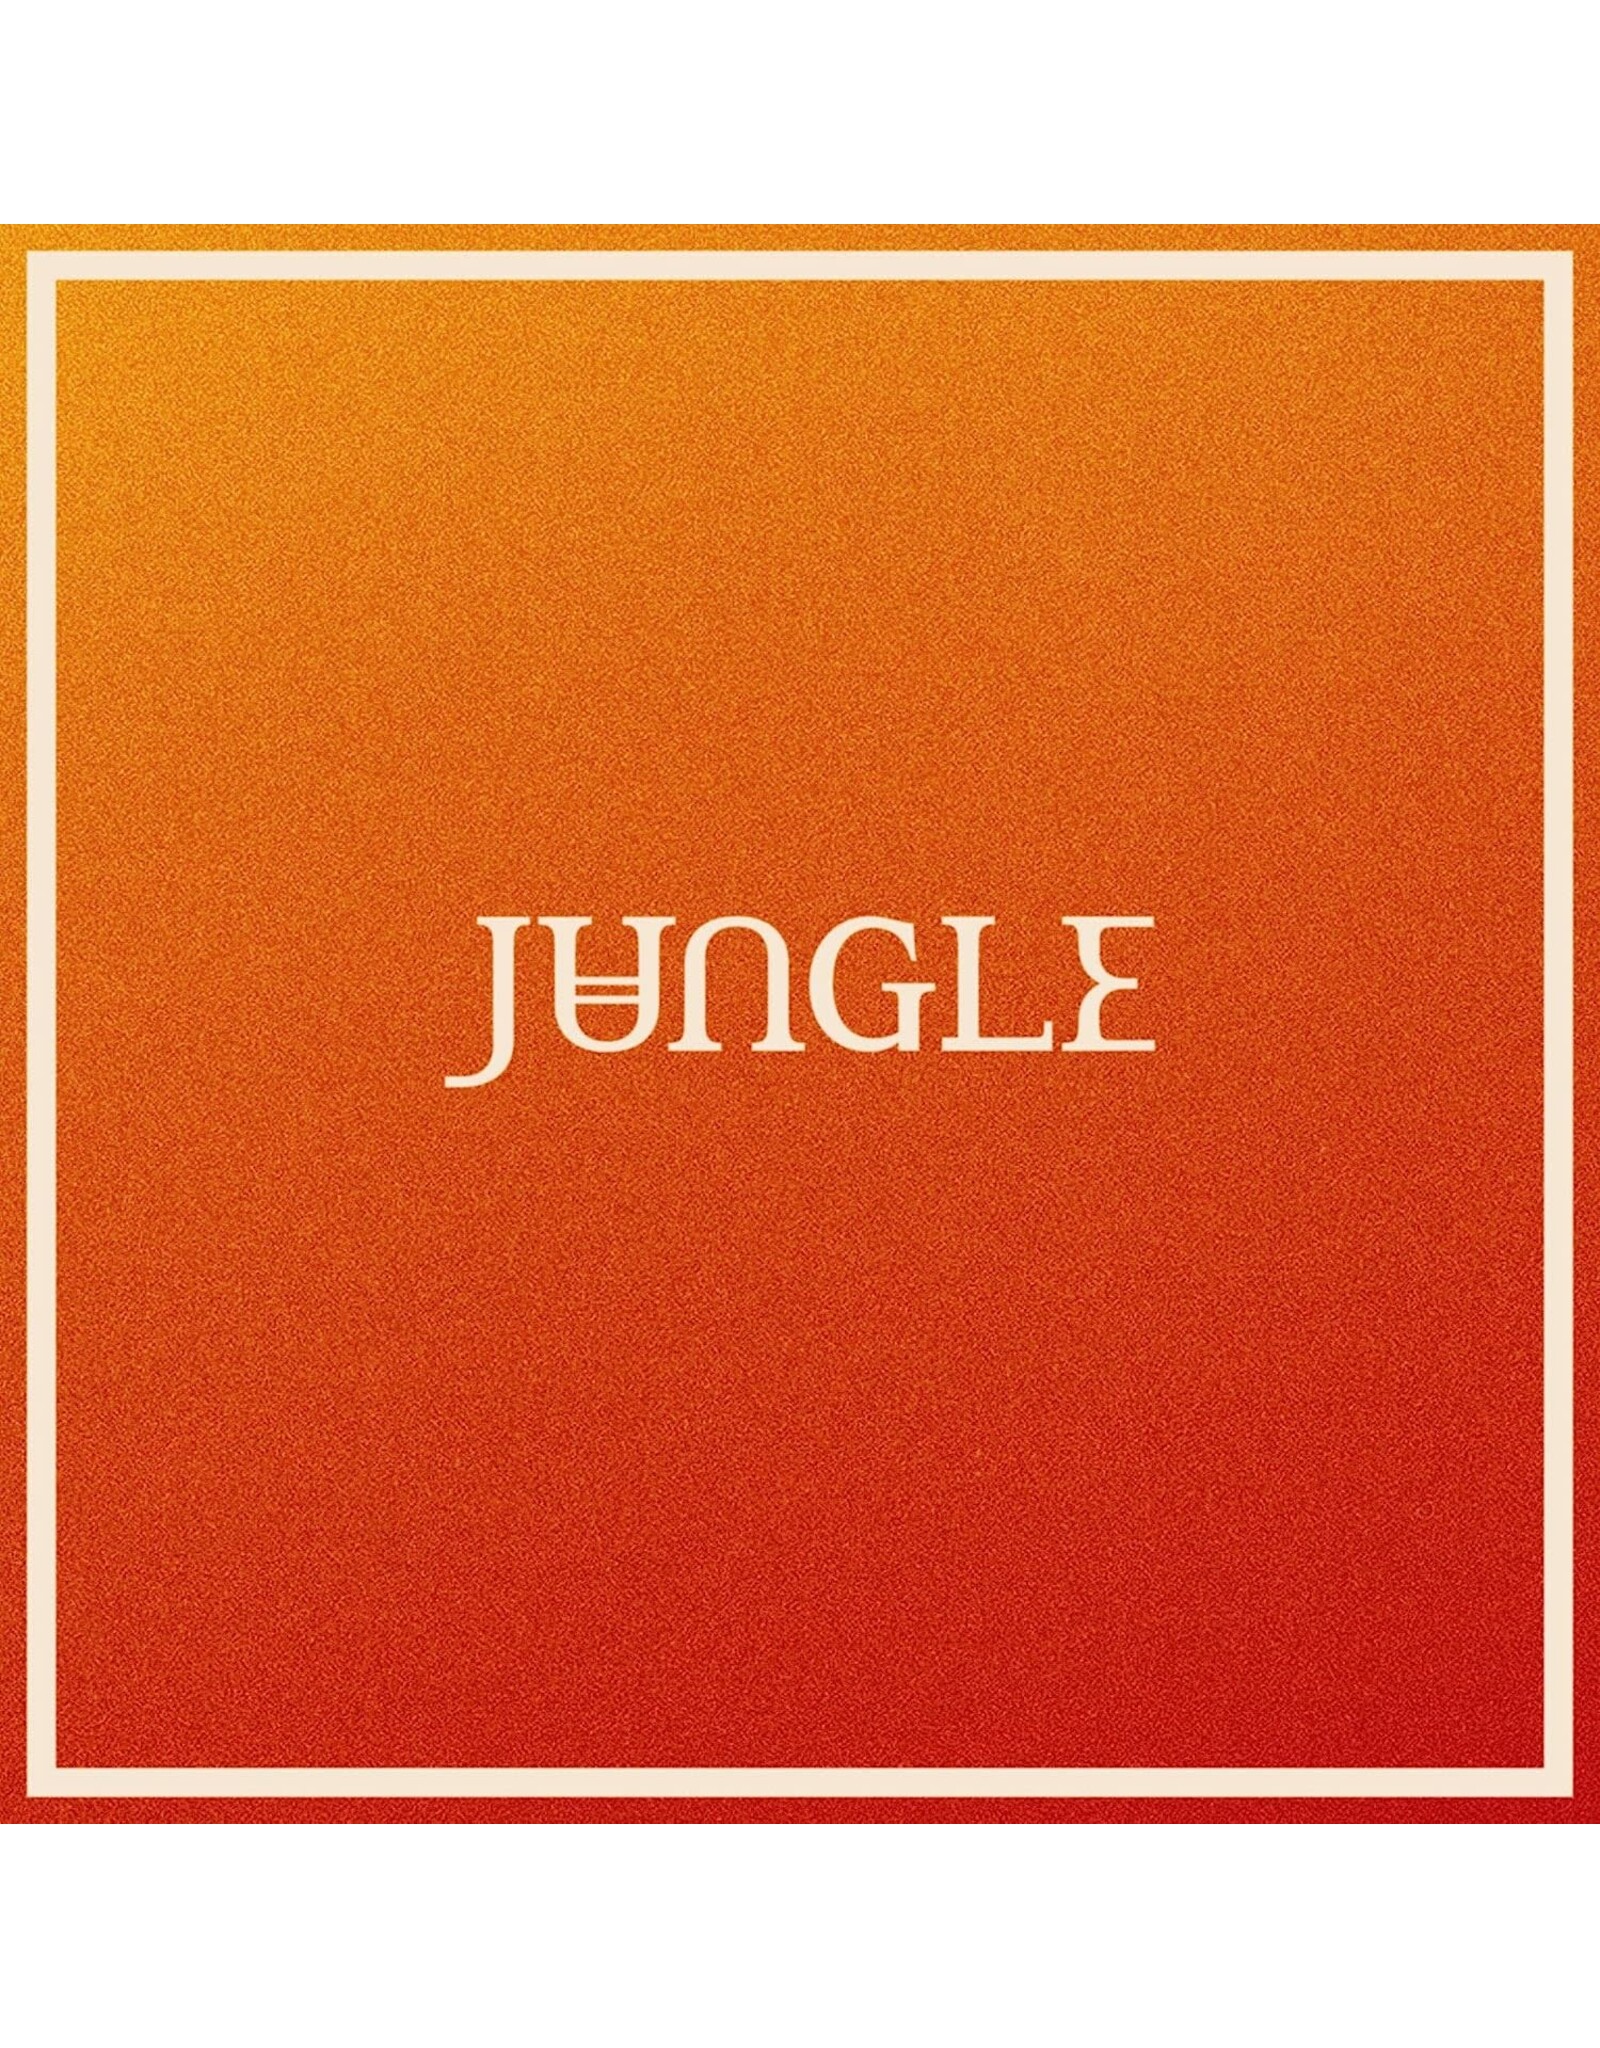 Jungle - Volcano